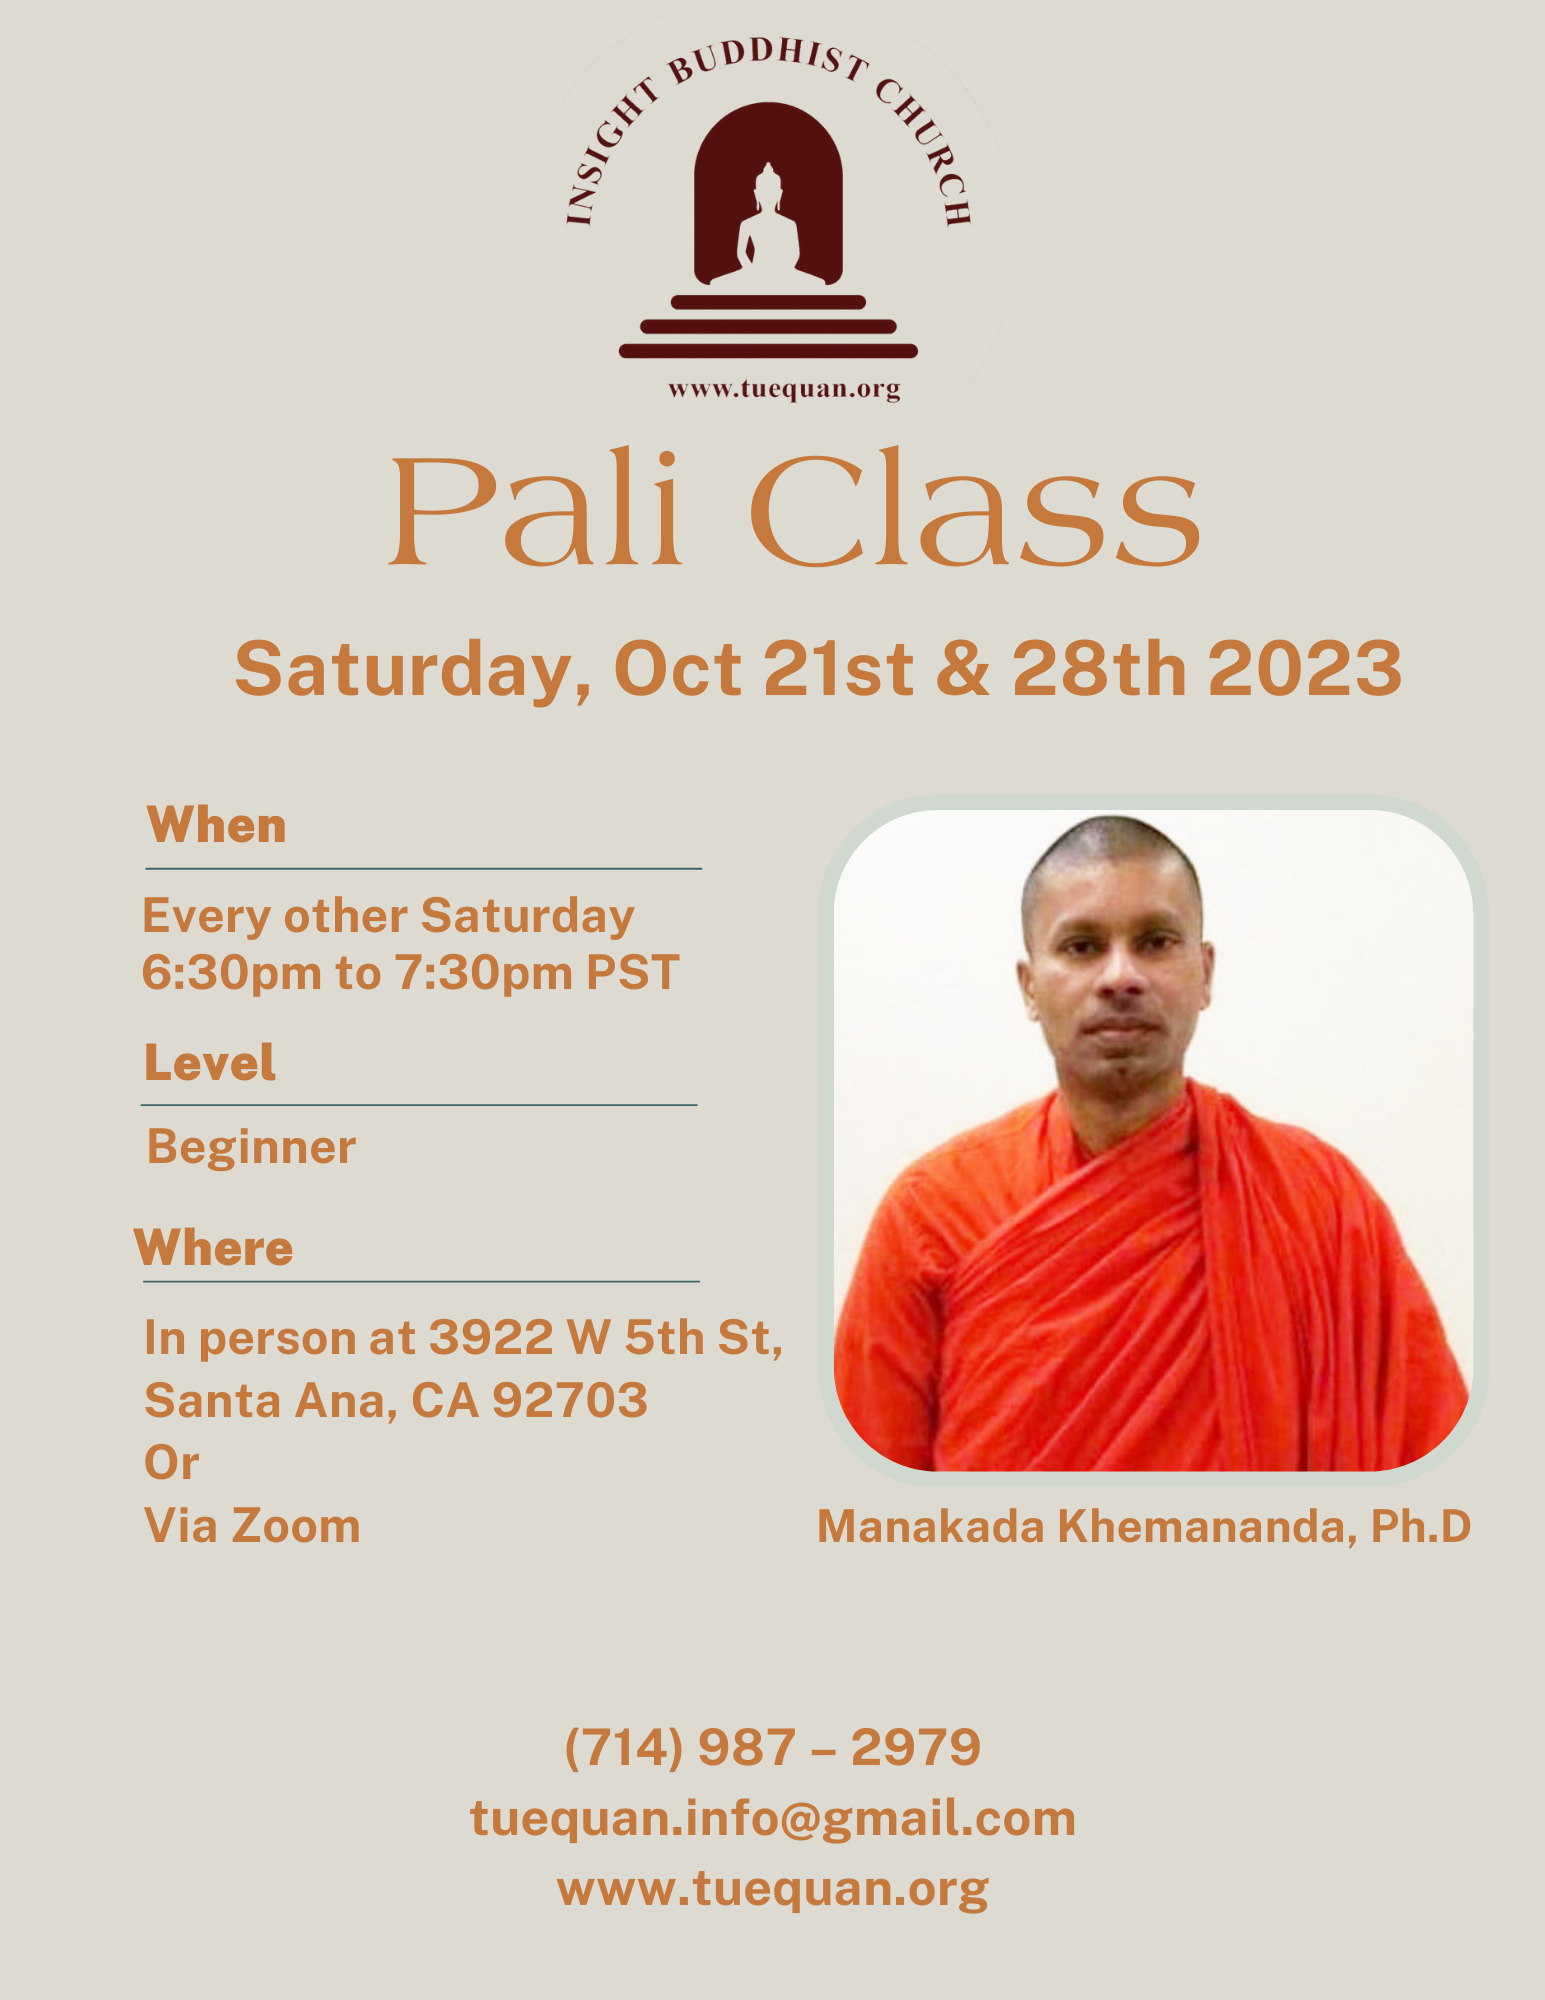 Pali class, Oct 21st & 28th,2023